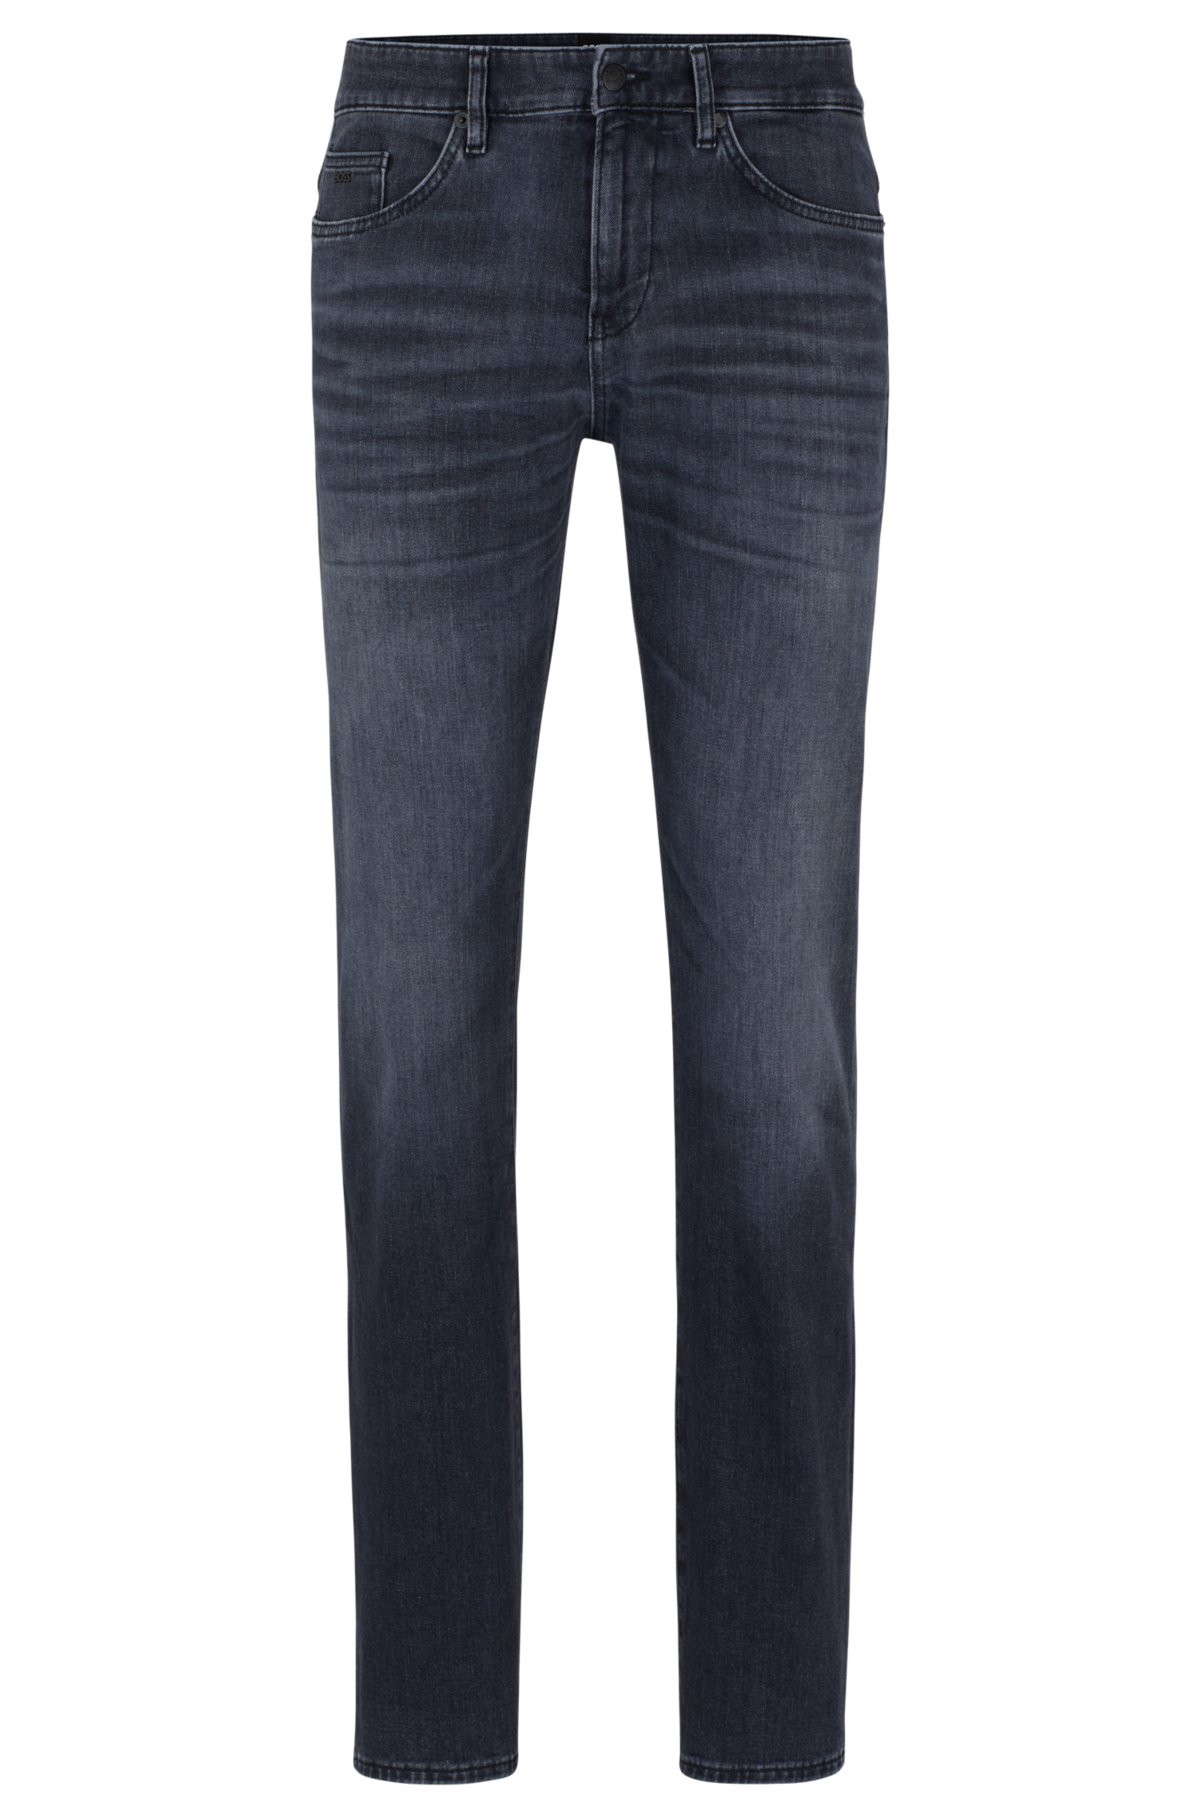 skyld lys s band BOSS - Slim-fit jeans in dark-blue denim